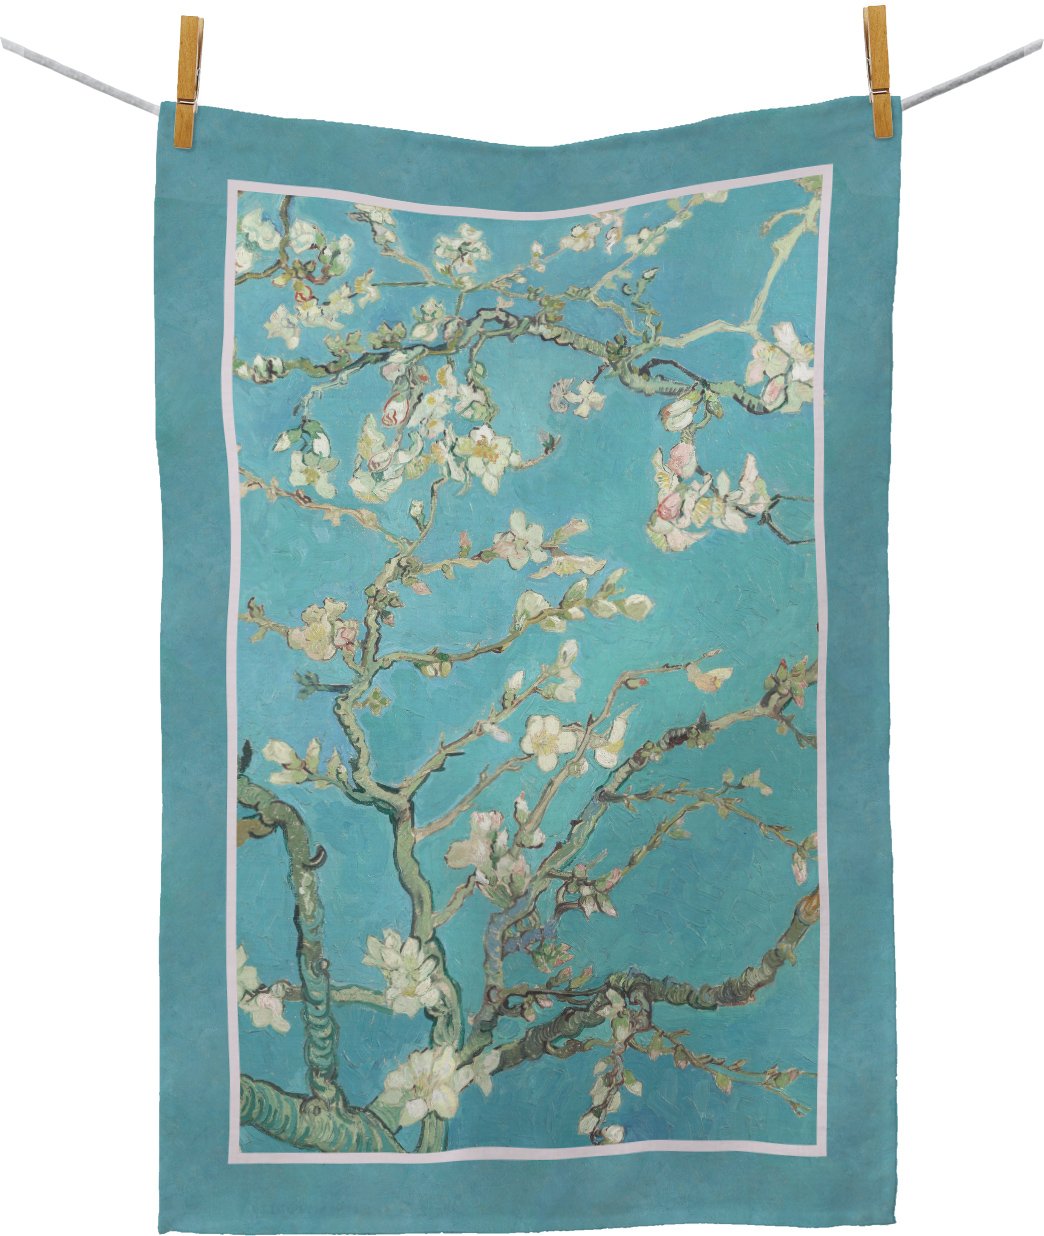 Fine Art Tea Towel: van Gogh's "Almond Blossom"